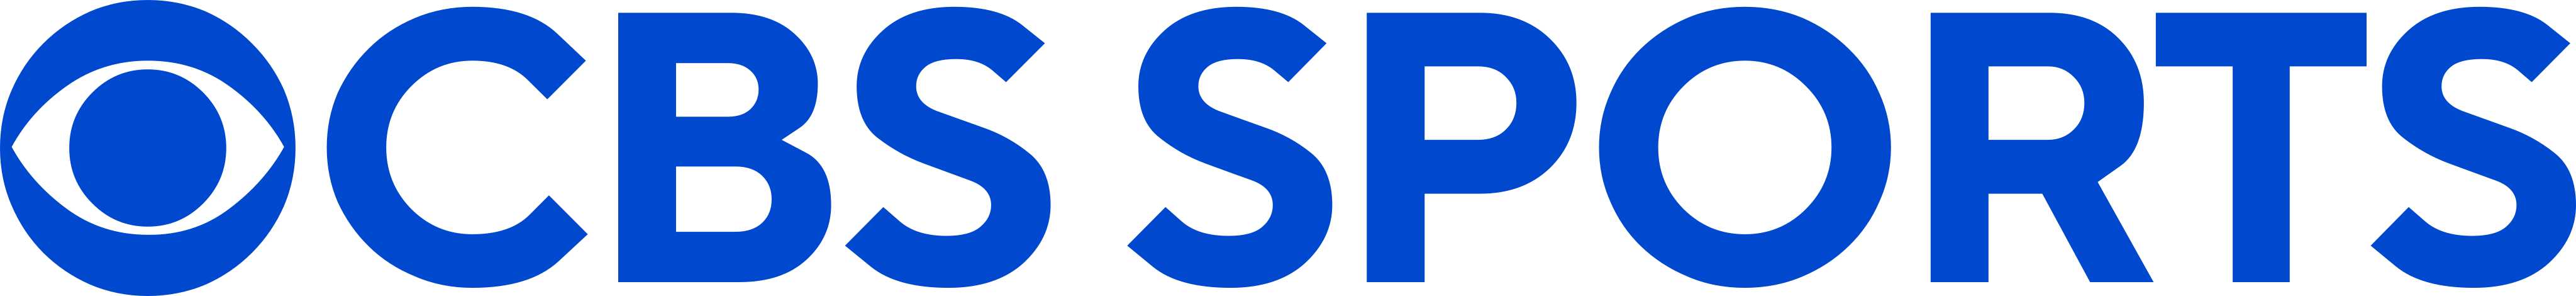 CBS Sports Logo.